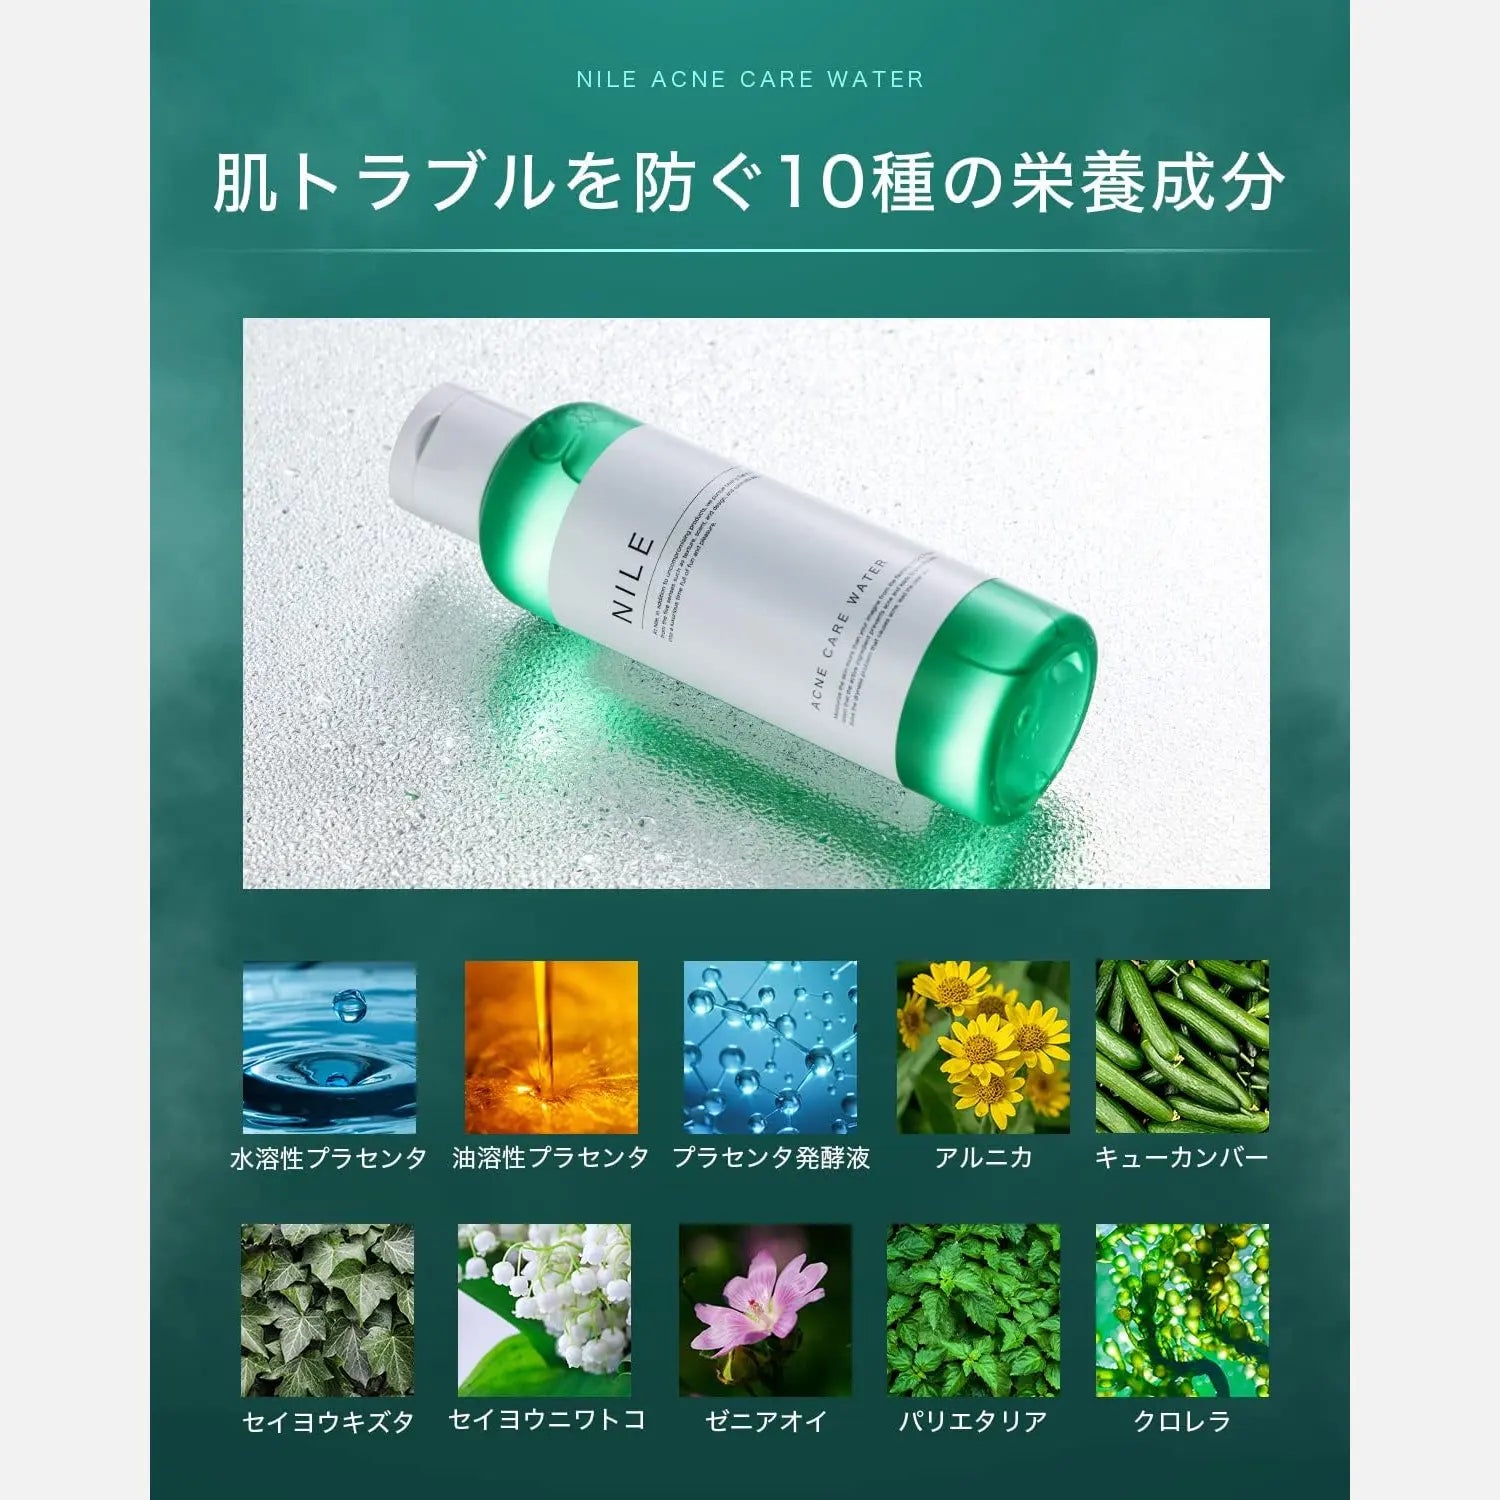 Nile Acne Care Face Lotion 150ml - Buy Me Japan